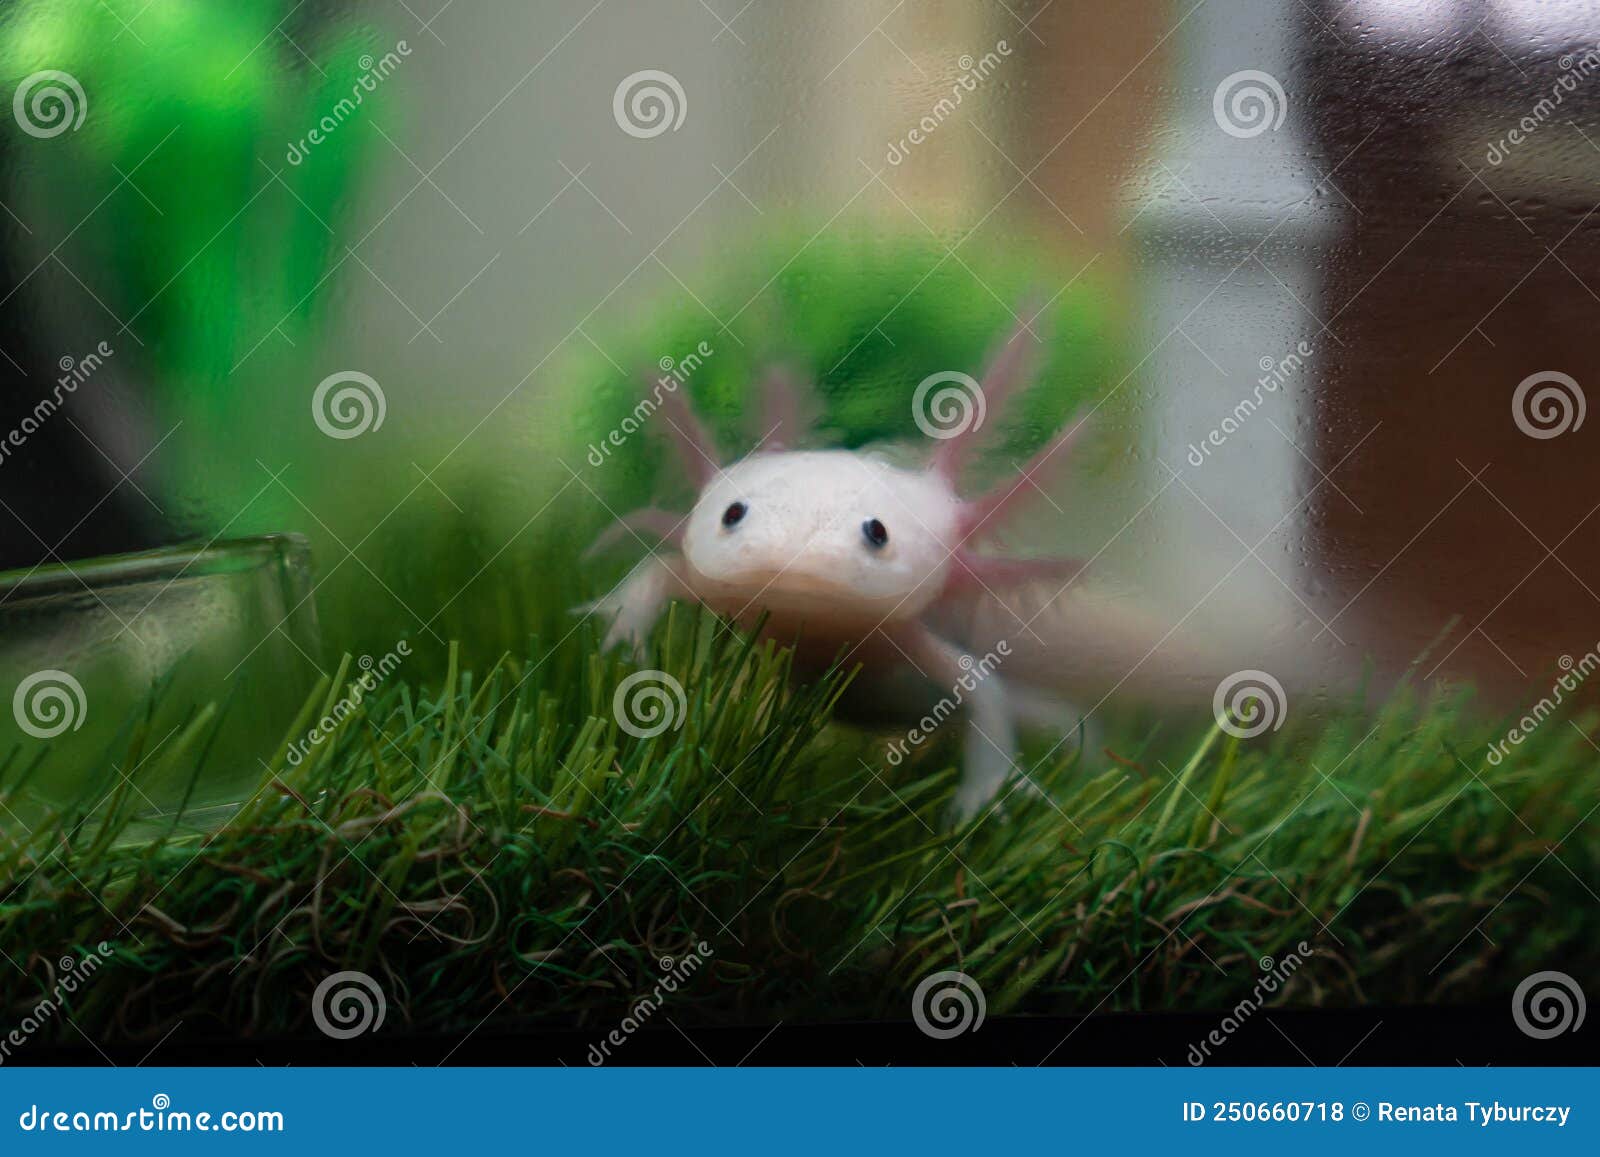 small Axolotl (Ambystoma mexicanum) walking on a grass in aquarium